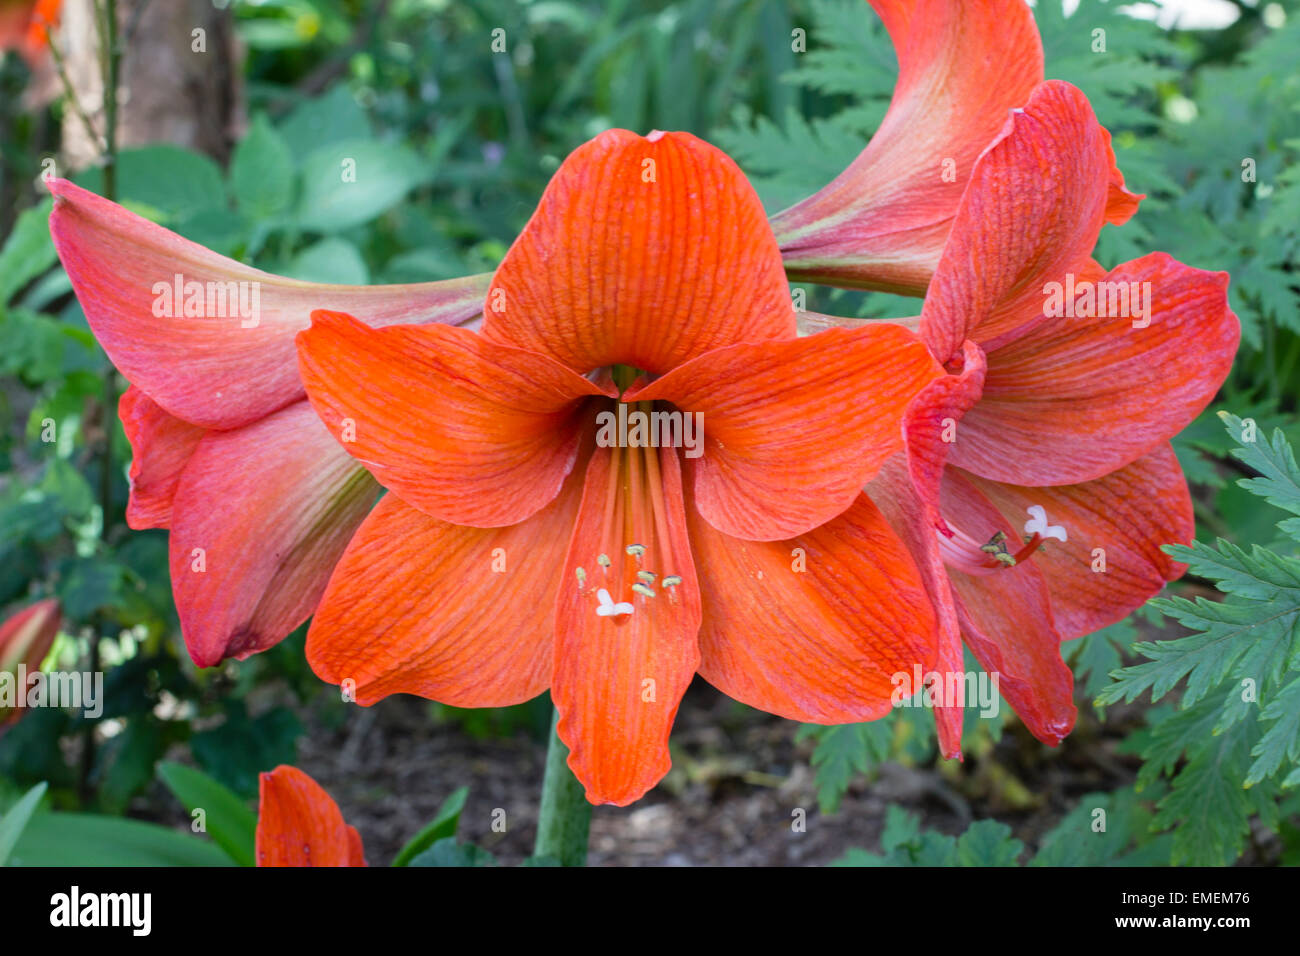 Flower head of the florist's Amaryllis, Hippeastrum 'Naranja' Stock Photo